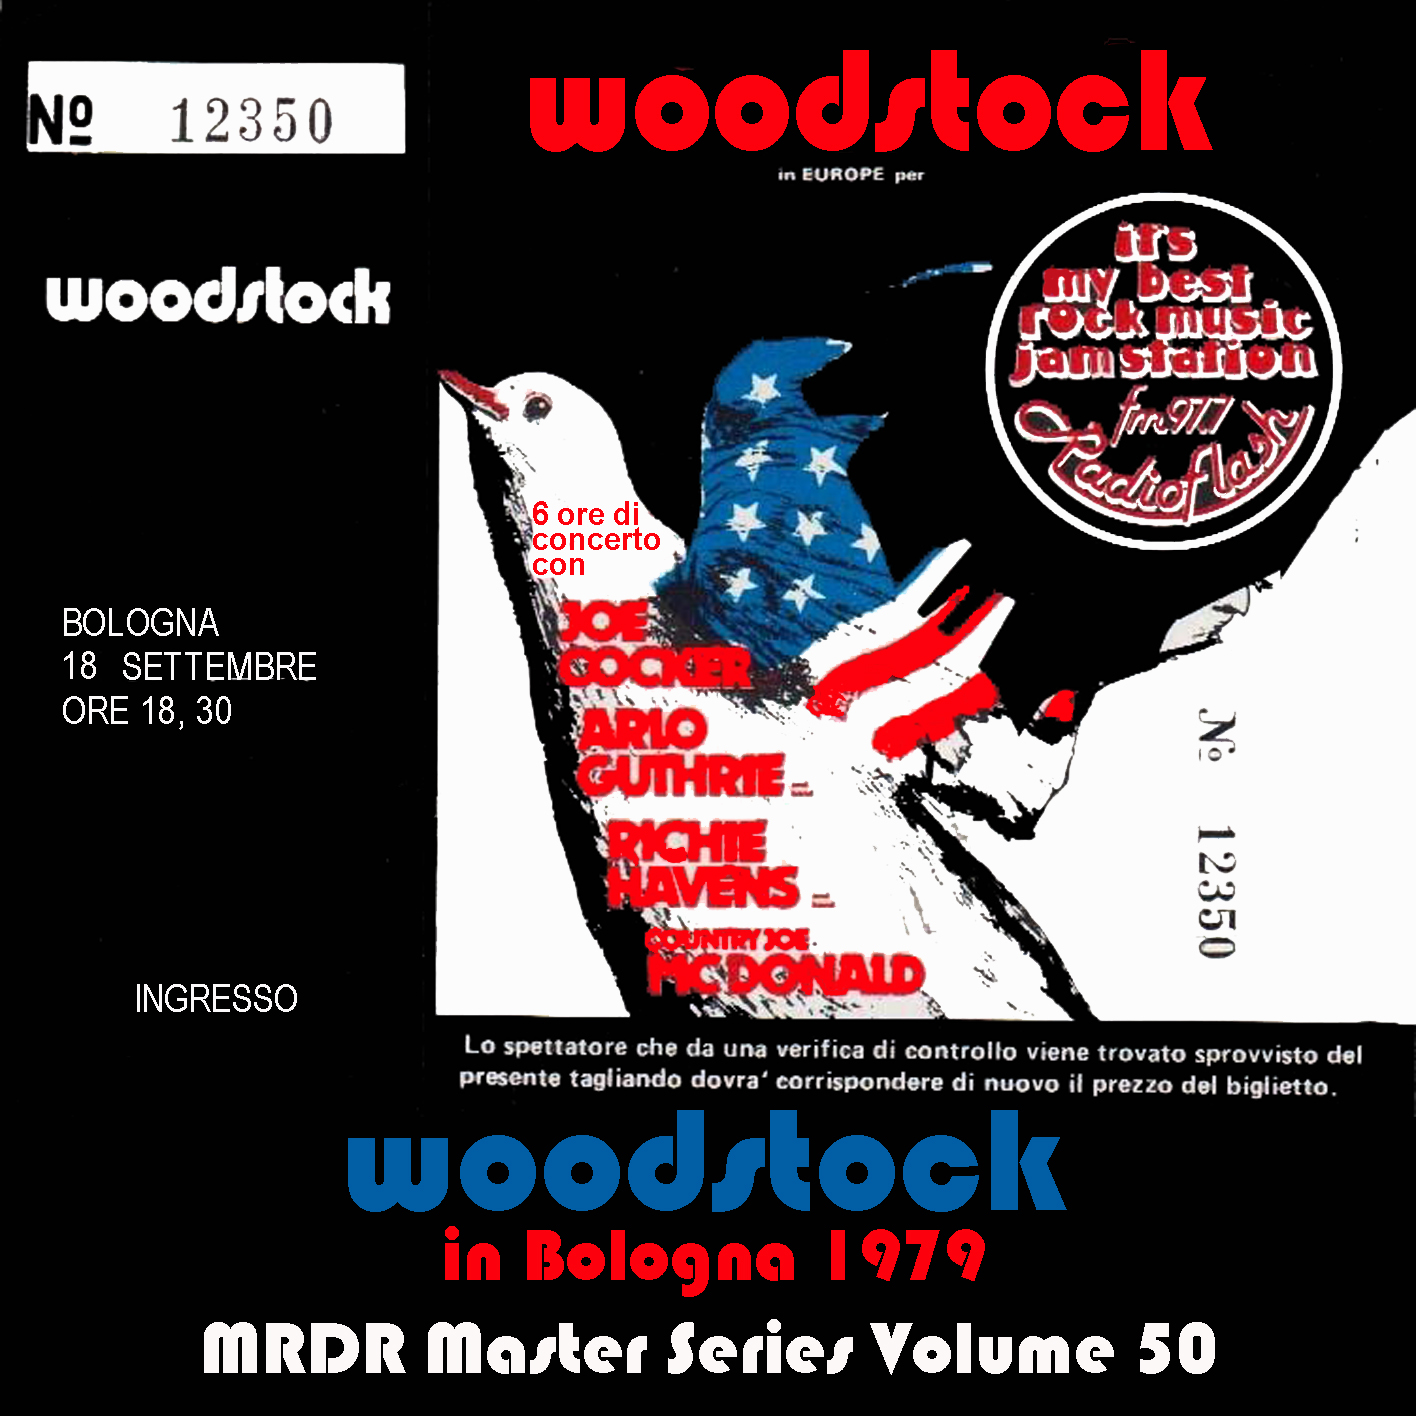 WoodstockInEurope1979-09-18CJoeRHavensAGuthrieJCockerBolognaAntistadioItaly (1).jpg